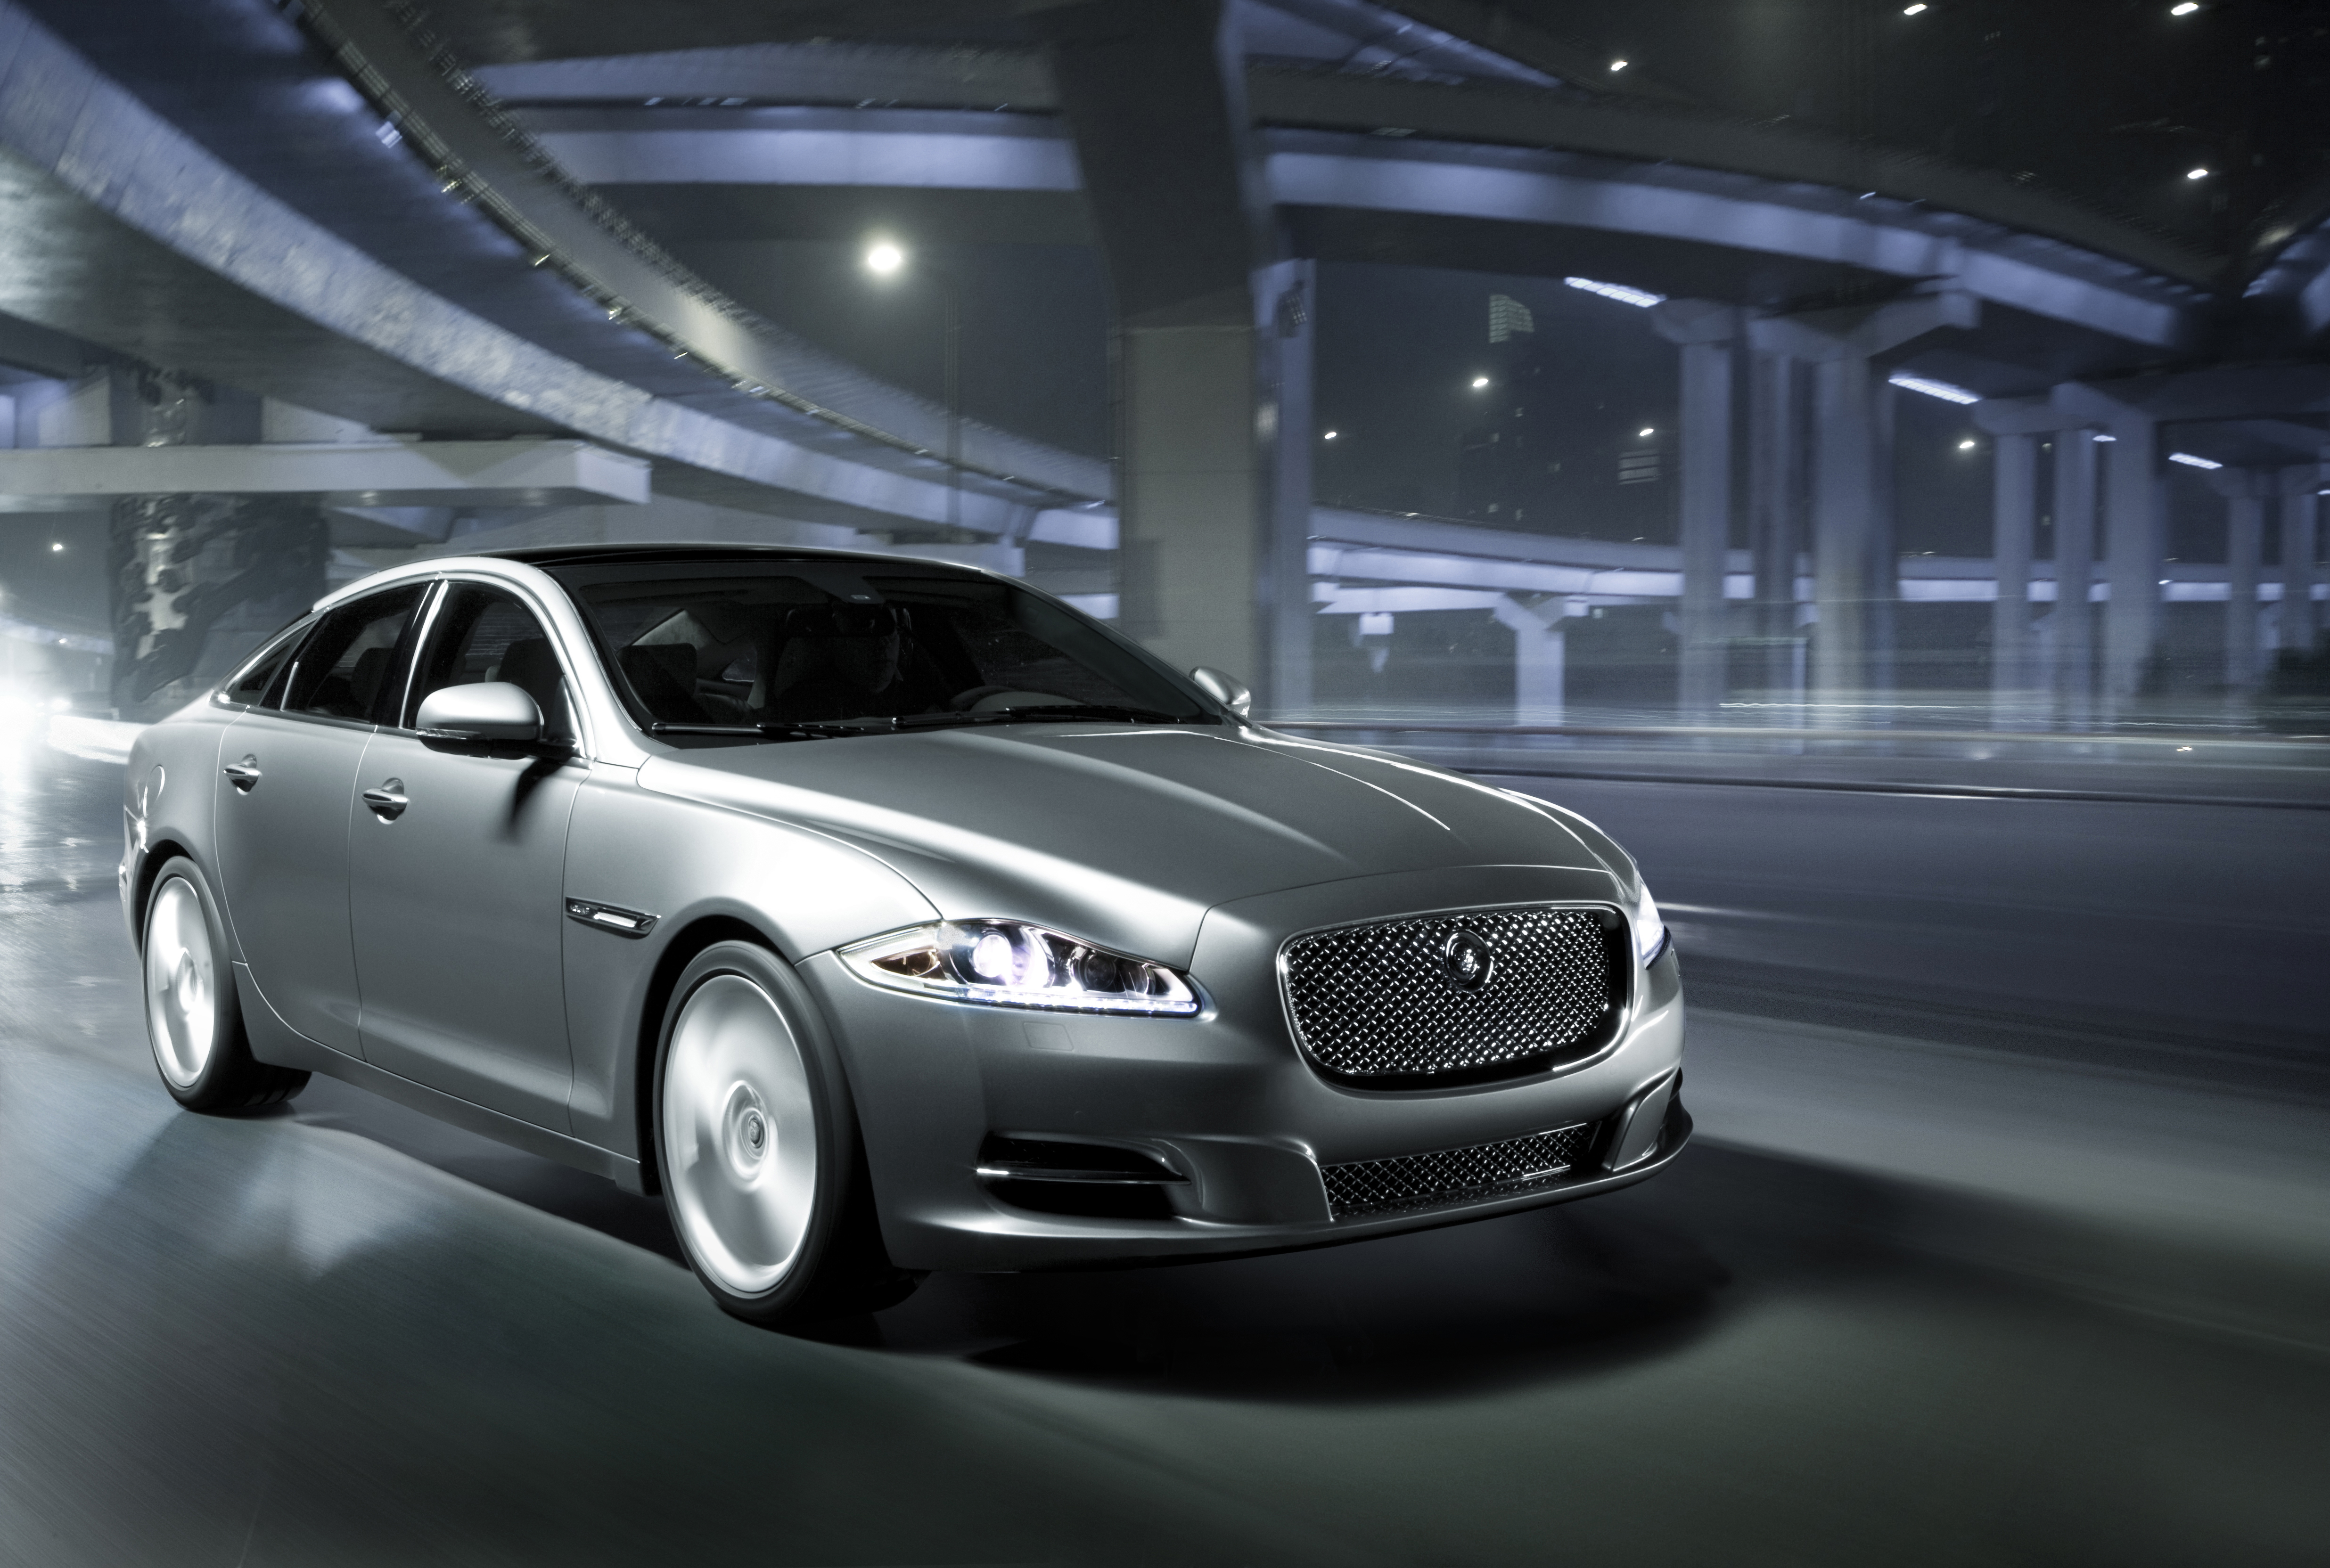 Silver-Jaguar-XJ-Luxury-Car-Images-HD-Wallpaper-Free